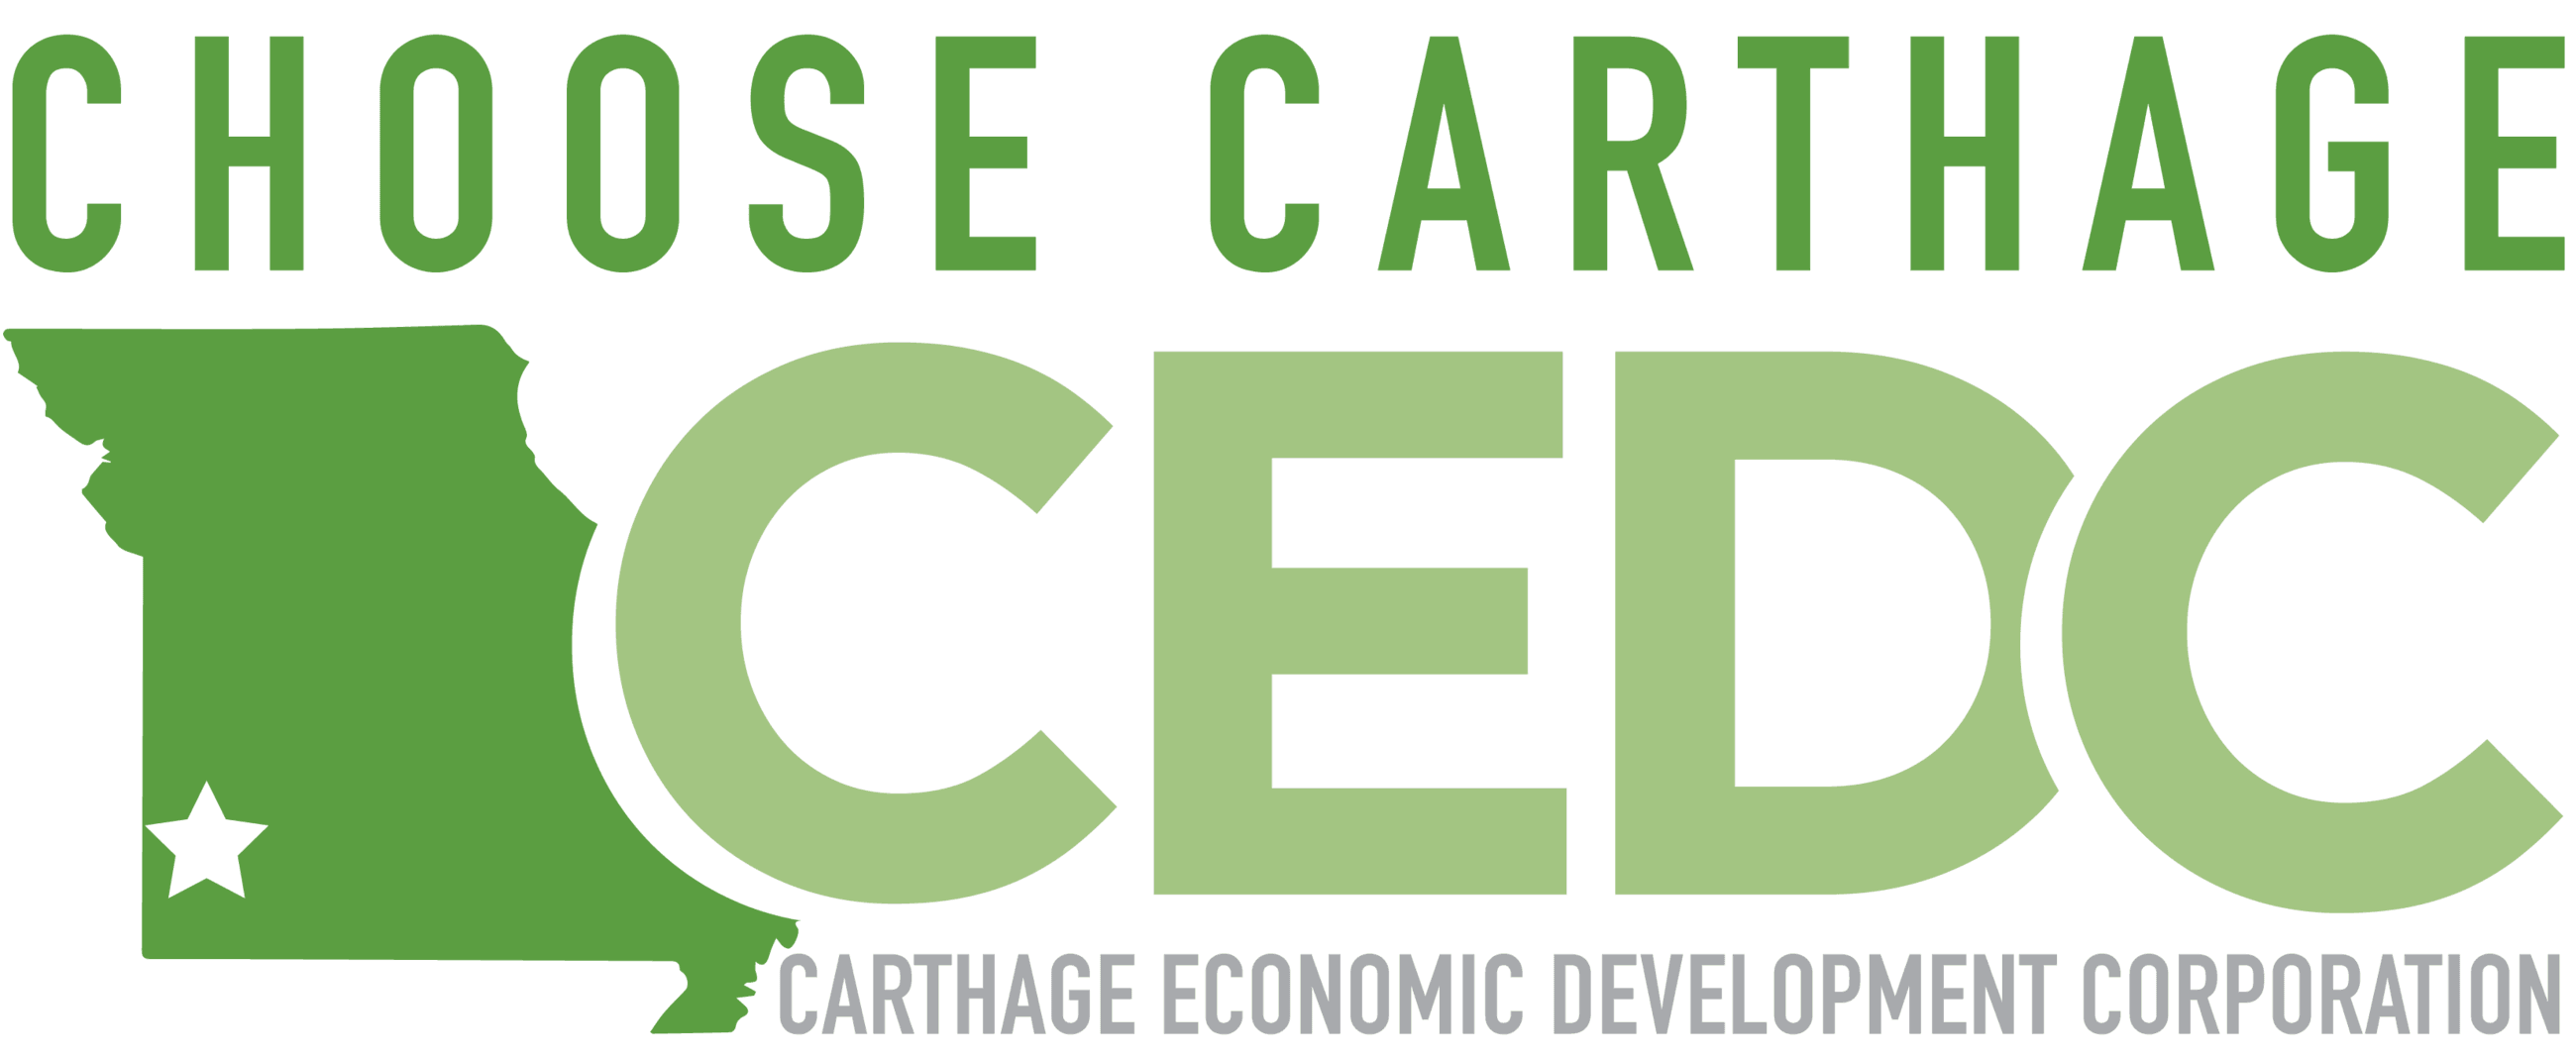 Choos Carthage CEDC